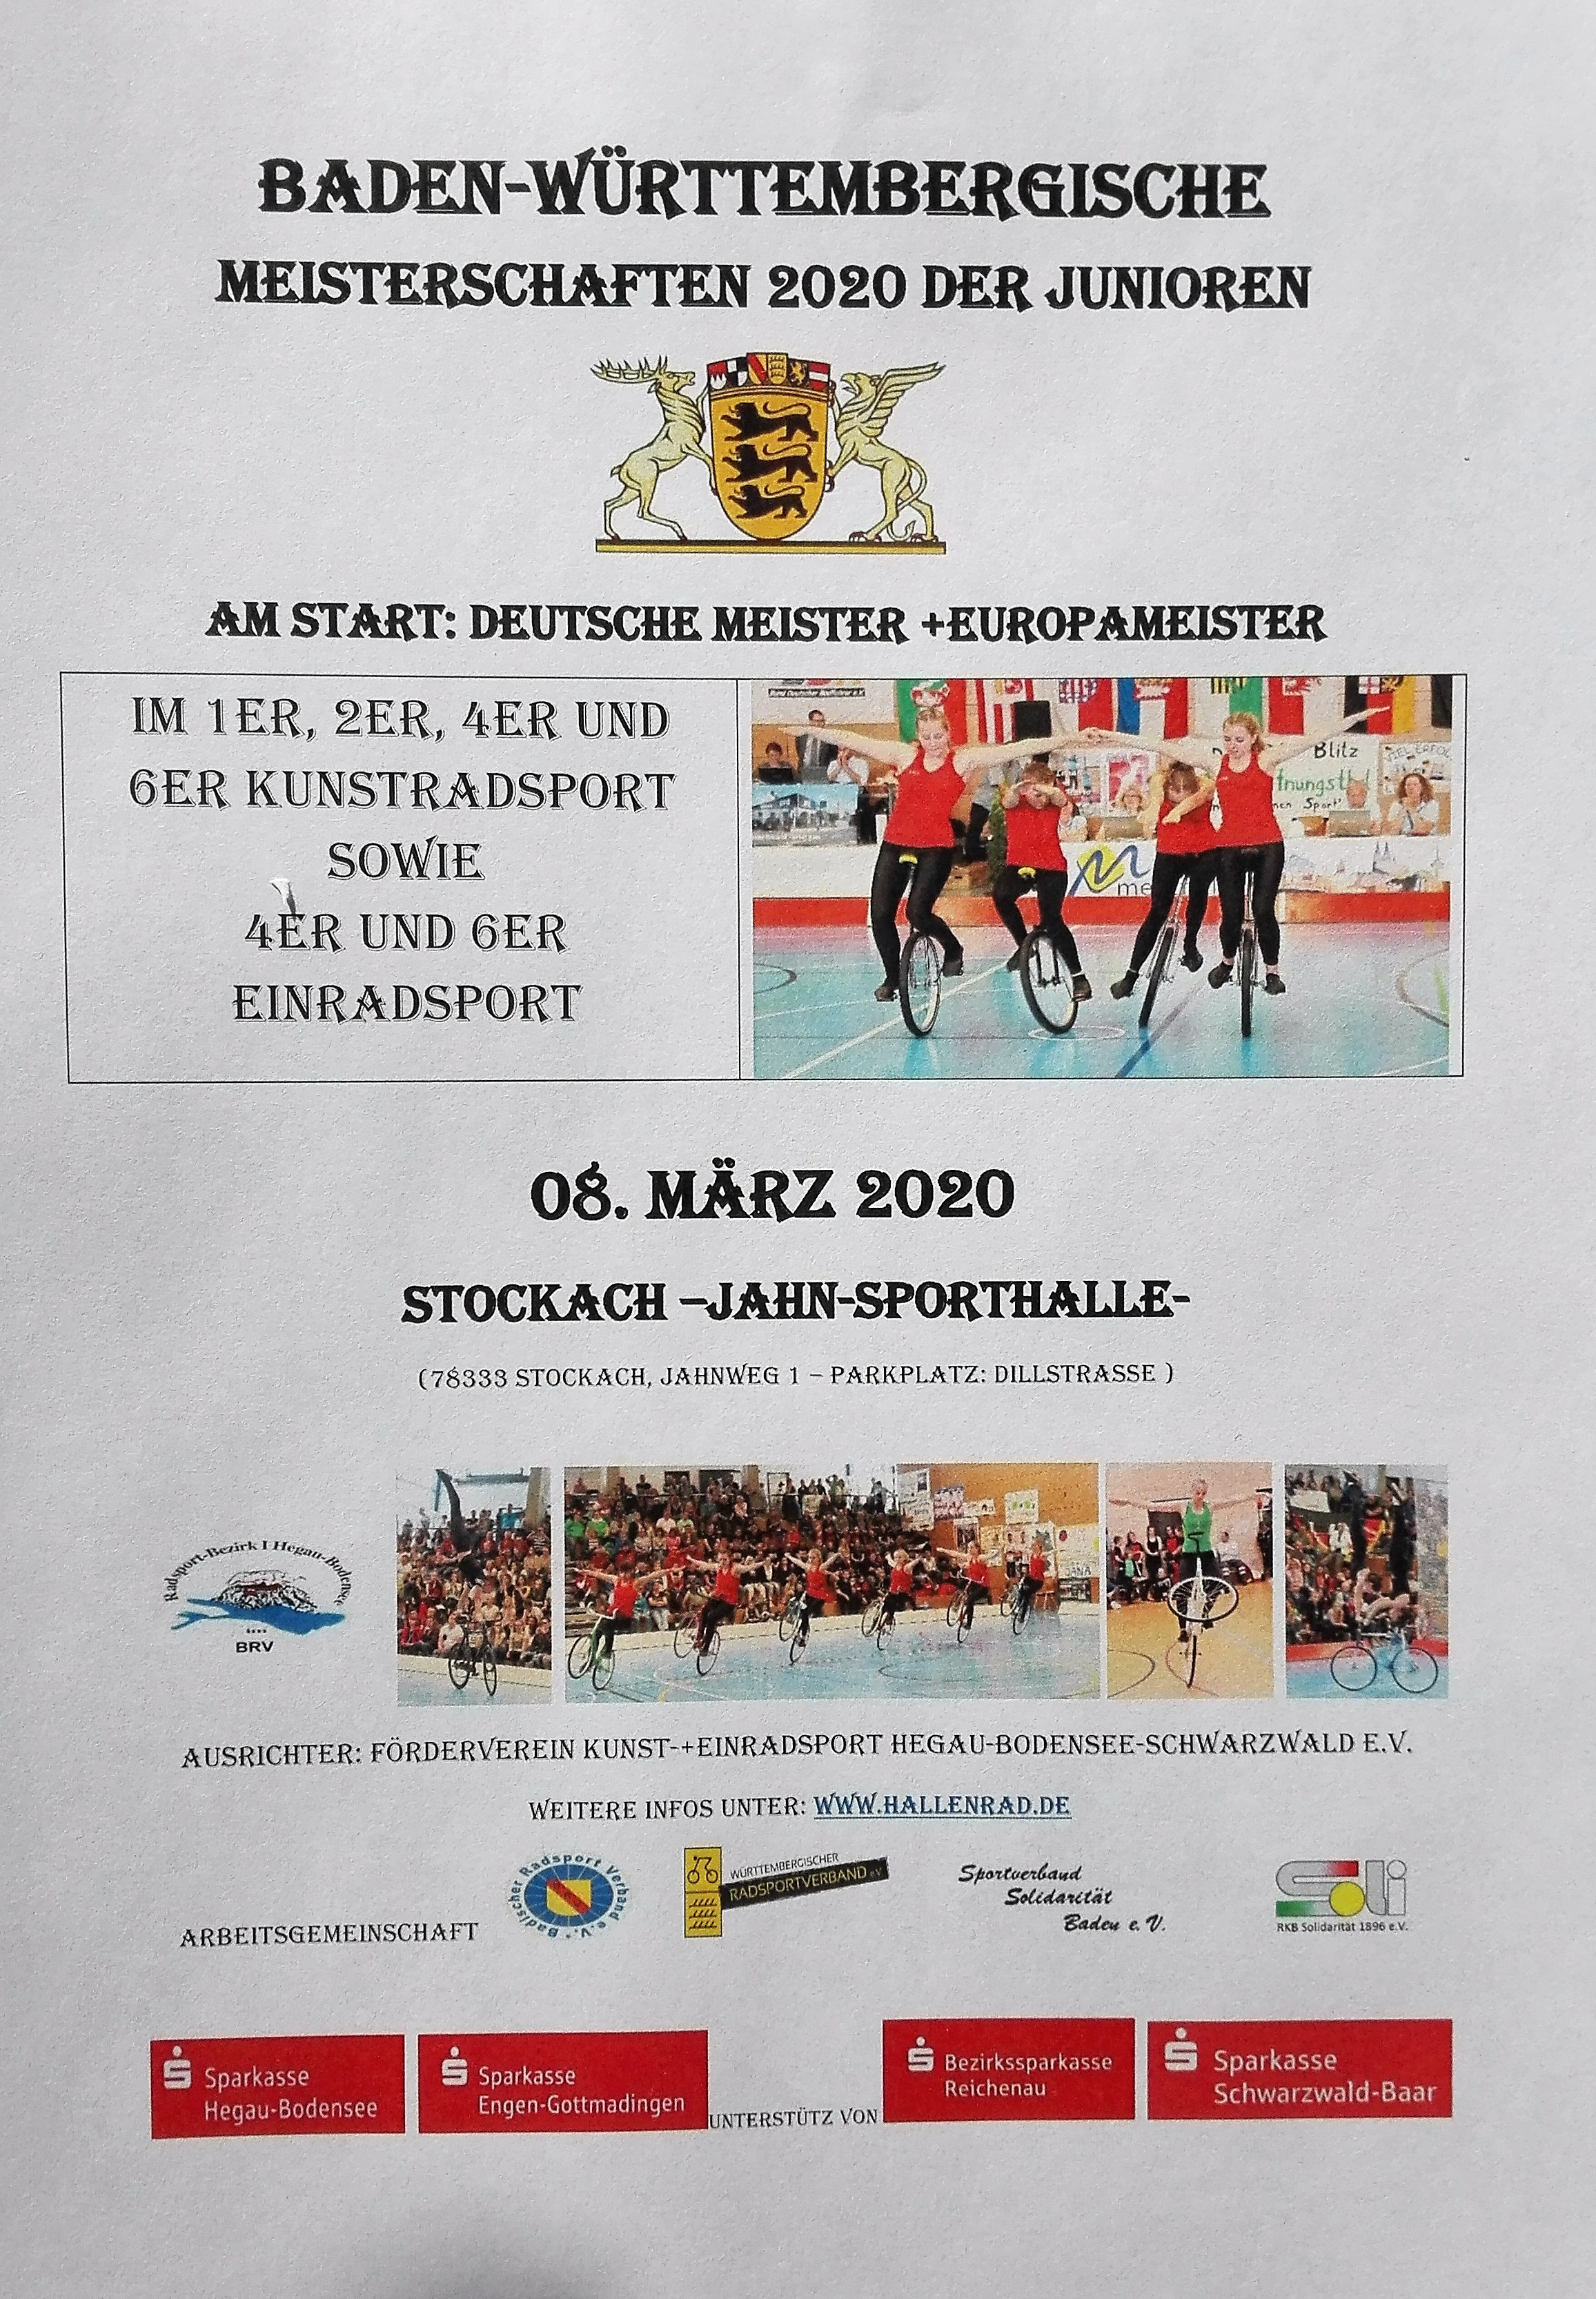 Safe the date – 08.03.20 BaWü der Junioren/Juniorinnen